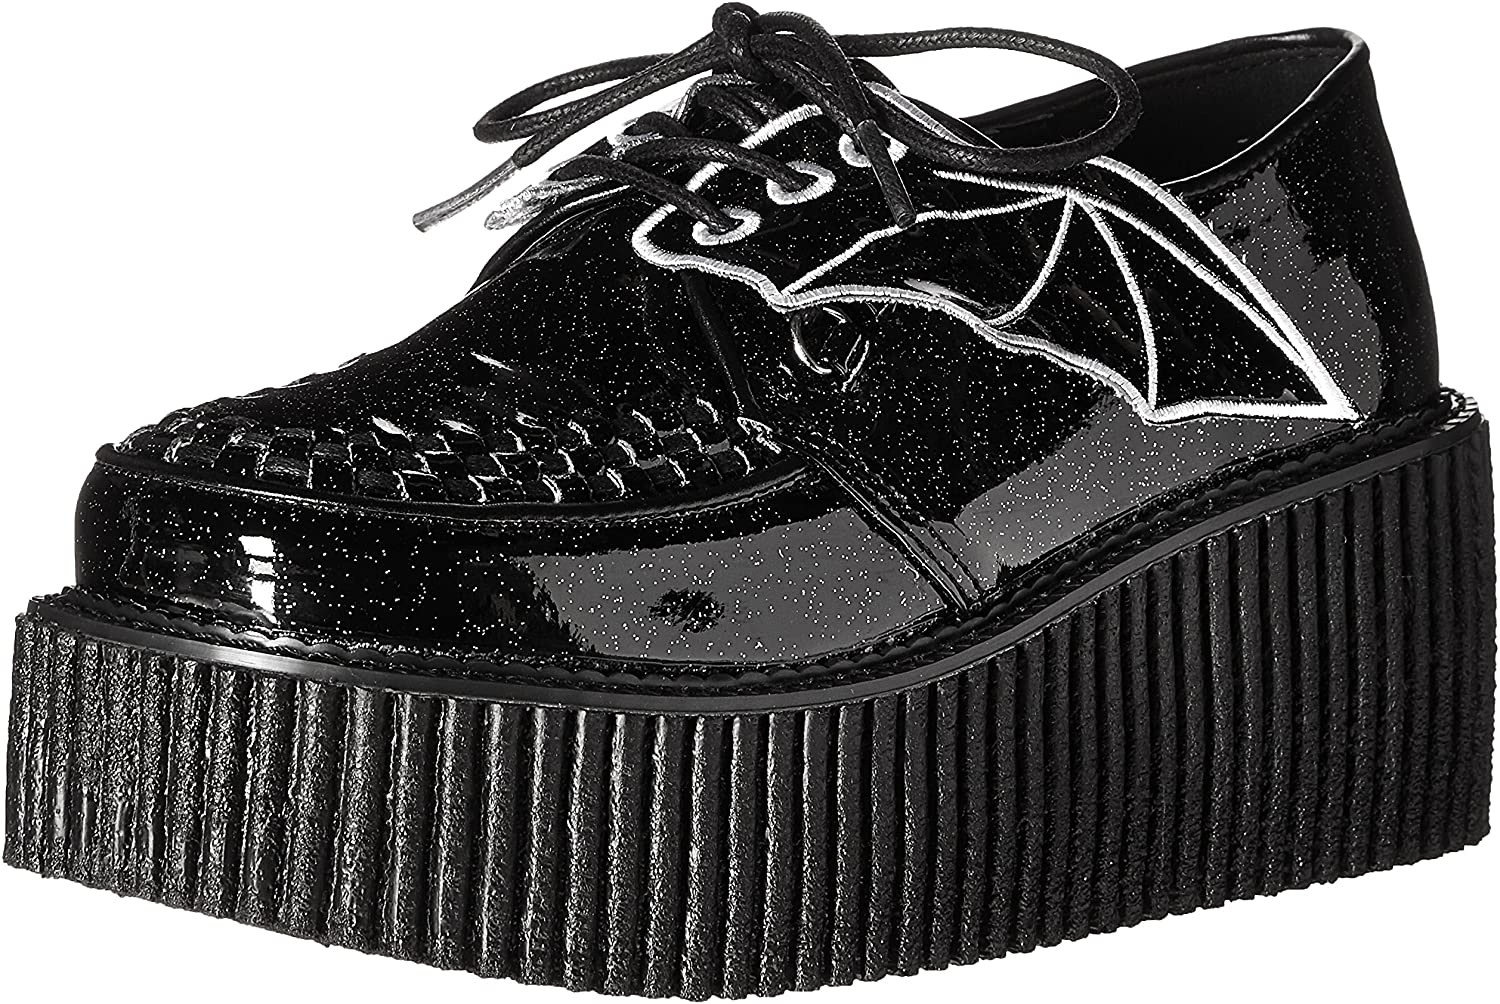 Demonia Creeper 205 Shoes - Black Glitter - Goth Mall